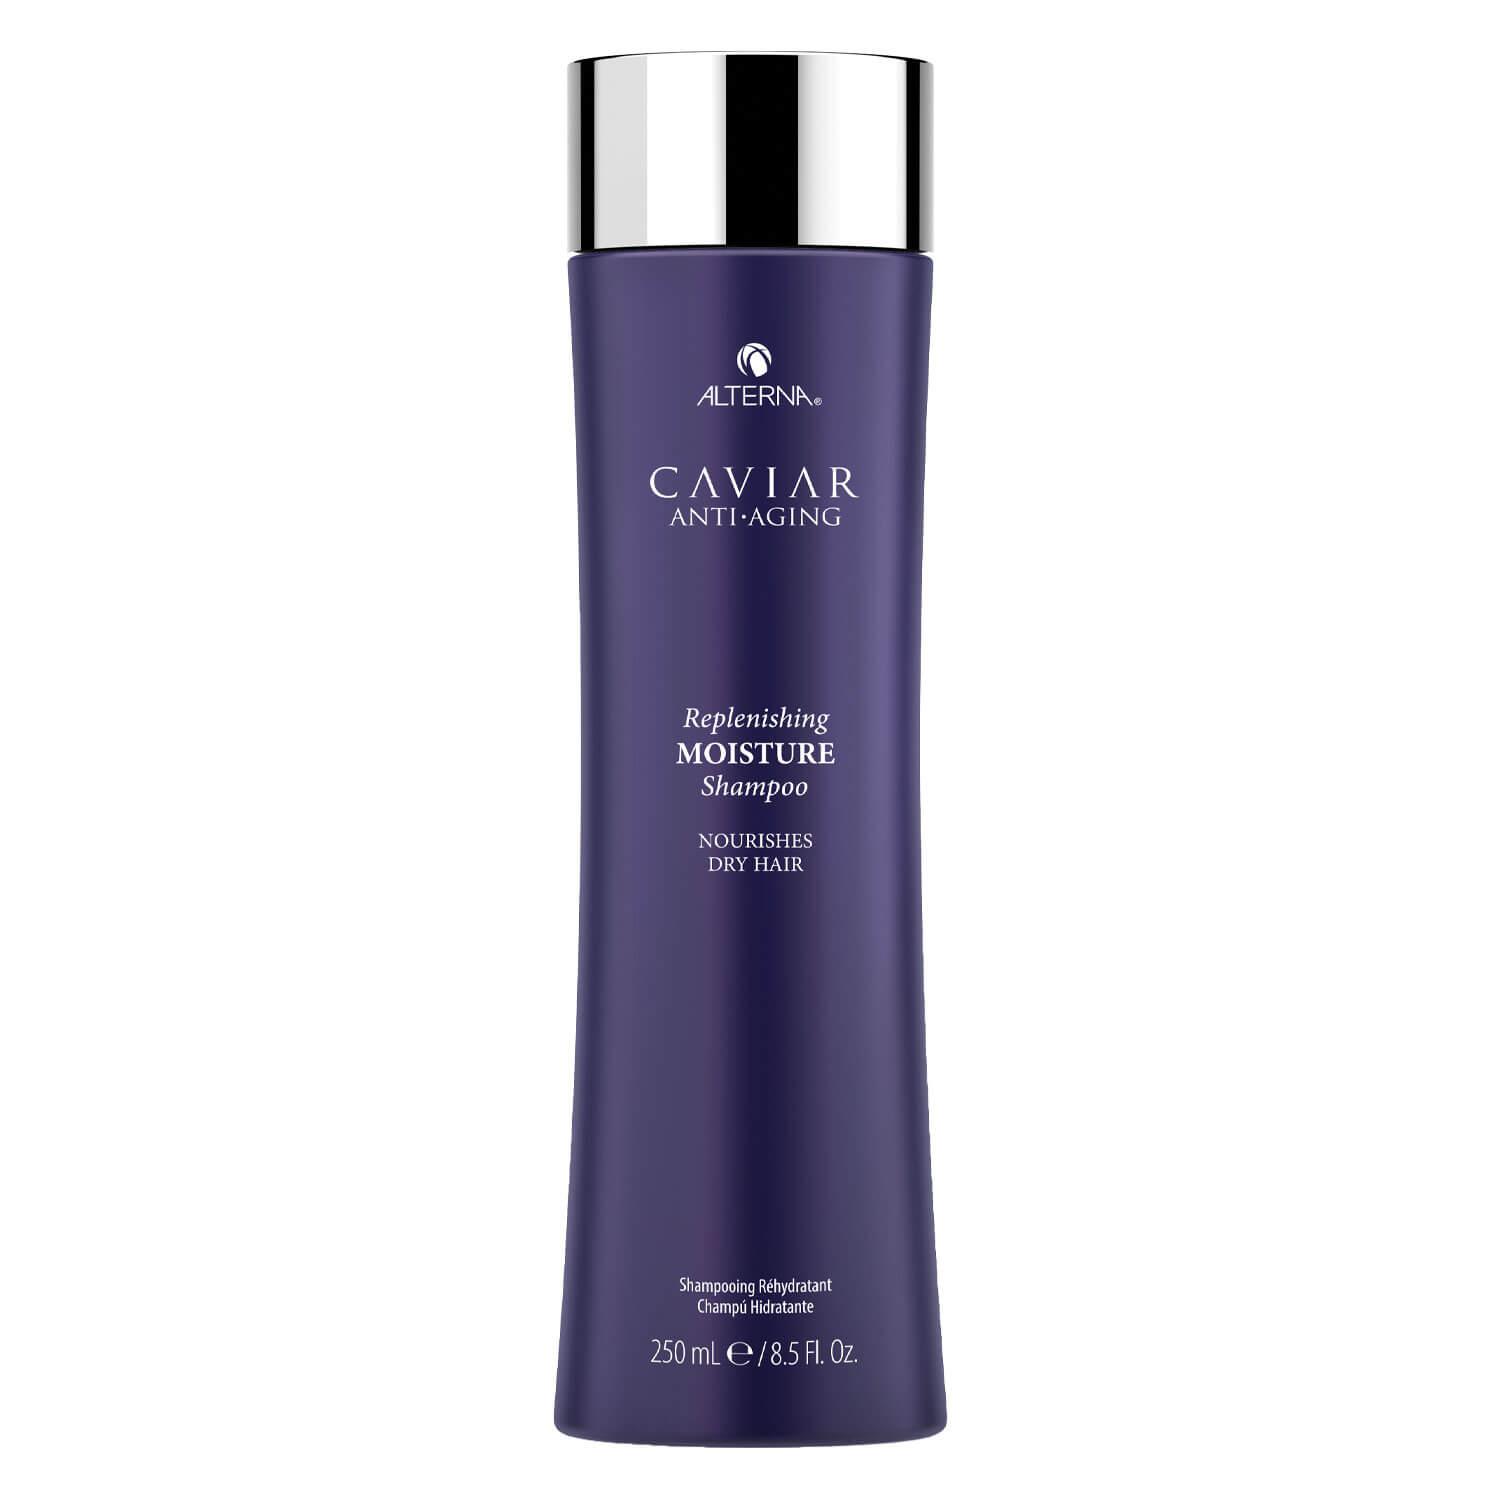 Caviar Replenishing Moisture - Shampoo